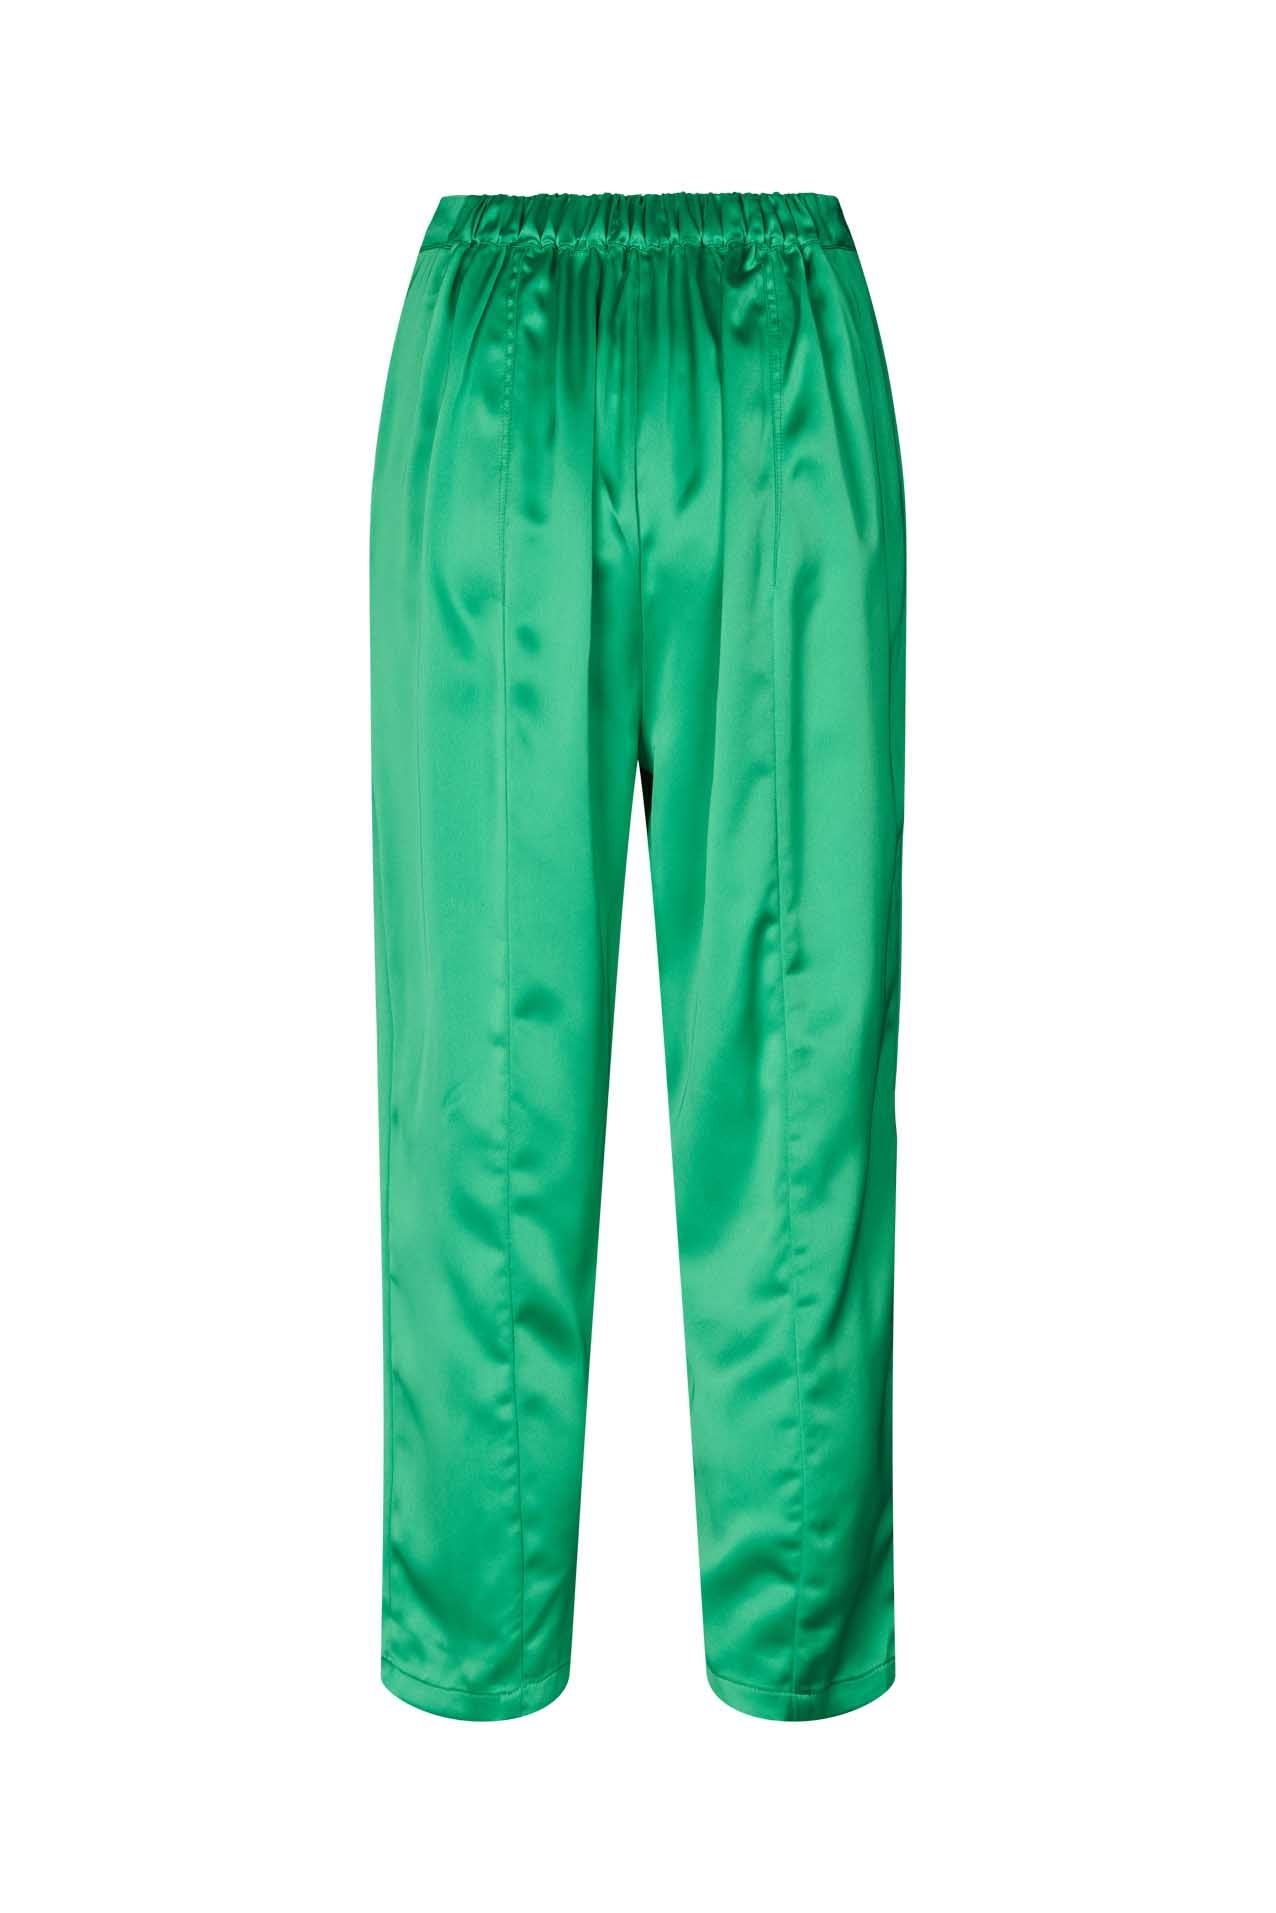 Lollys Laundry Maisie Pants Pants 40 Green